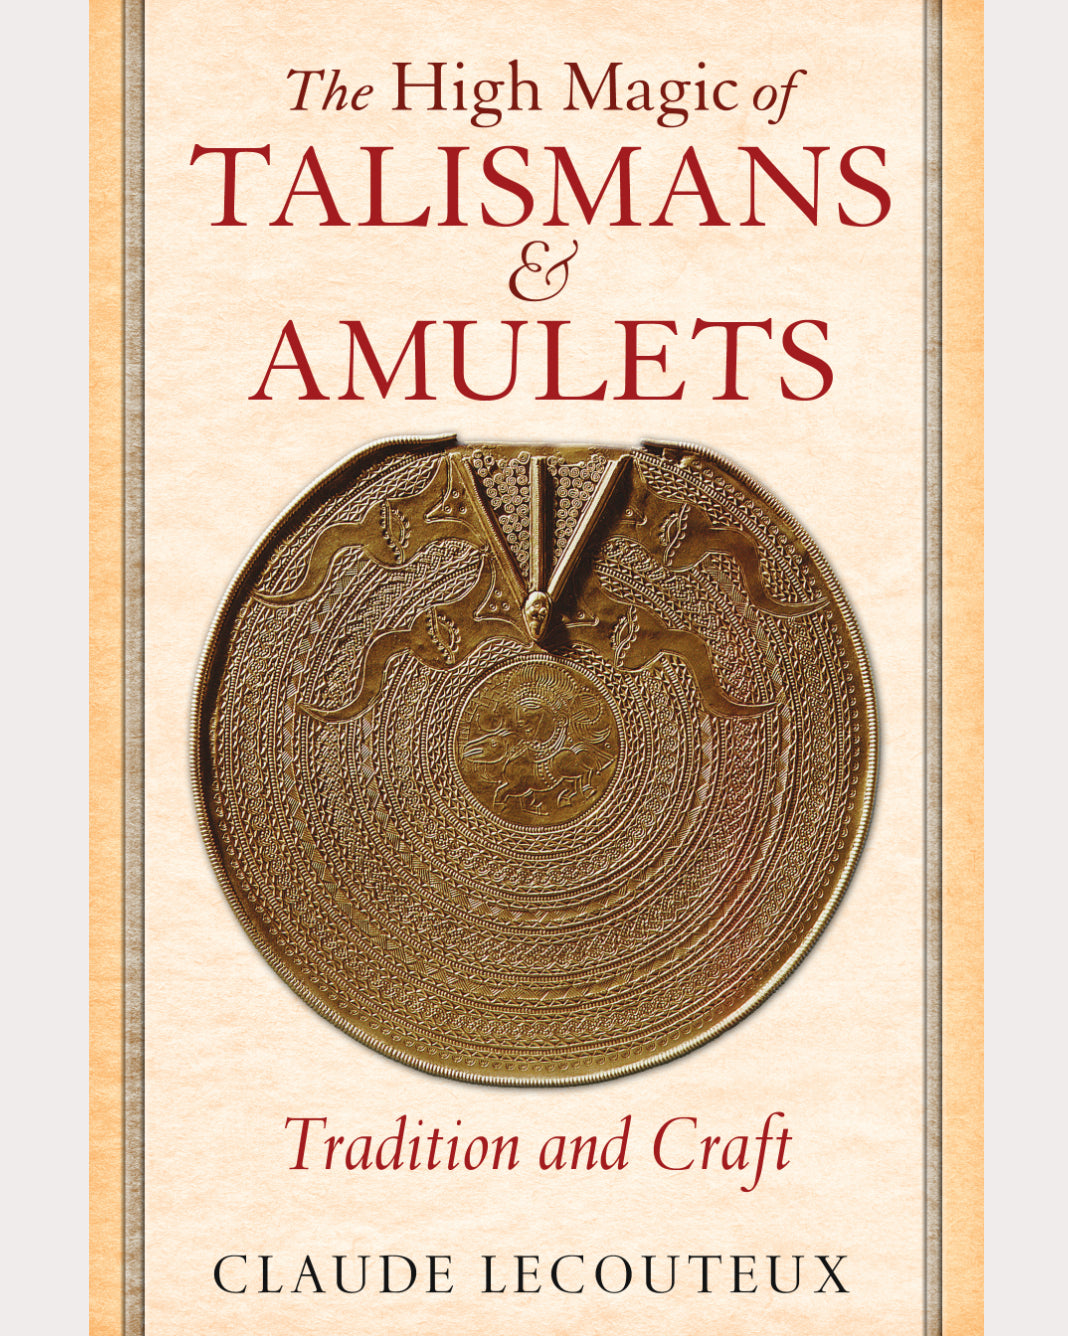 The High Magic of Talismans & Amulets